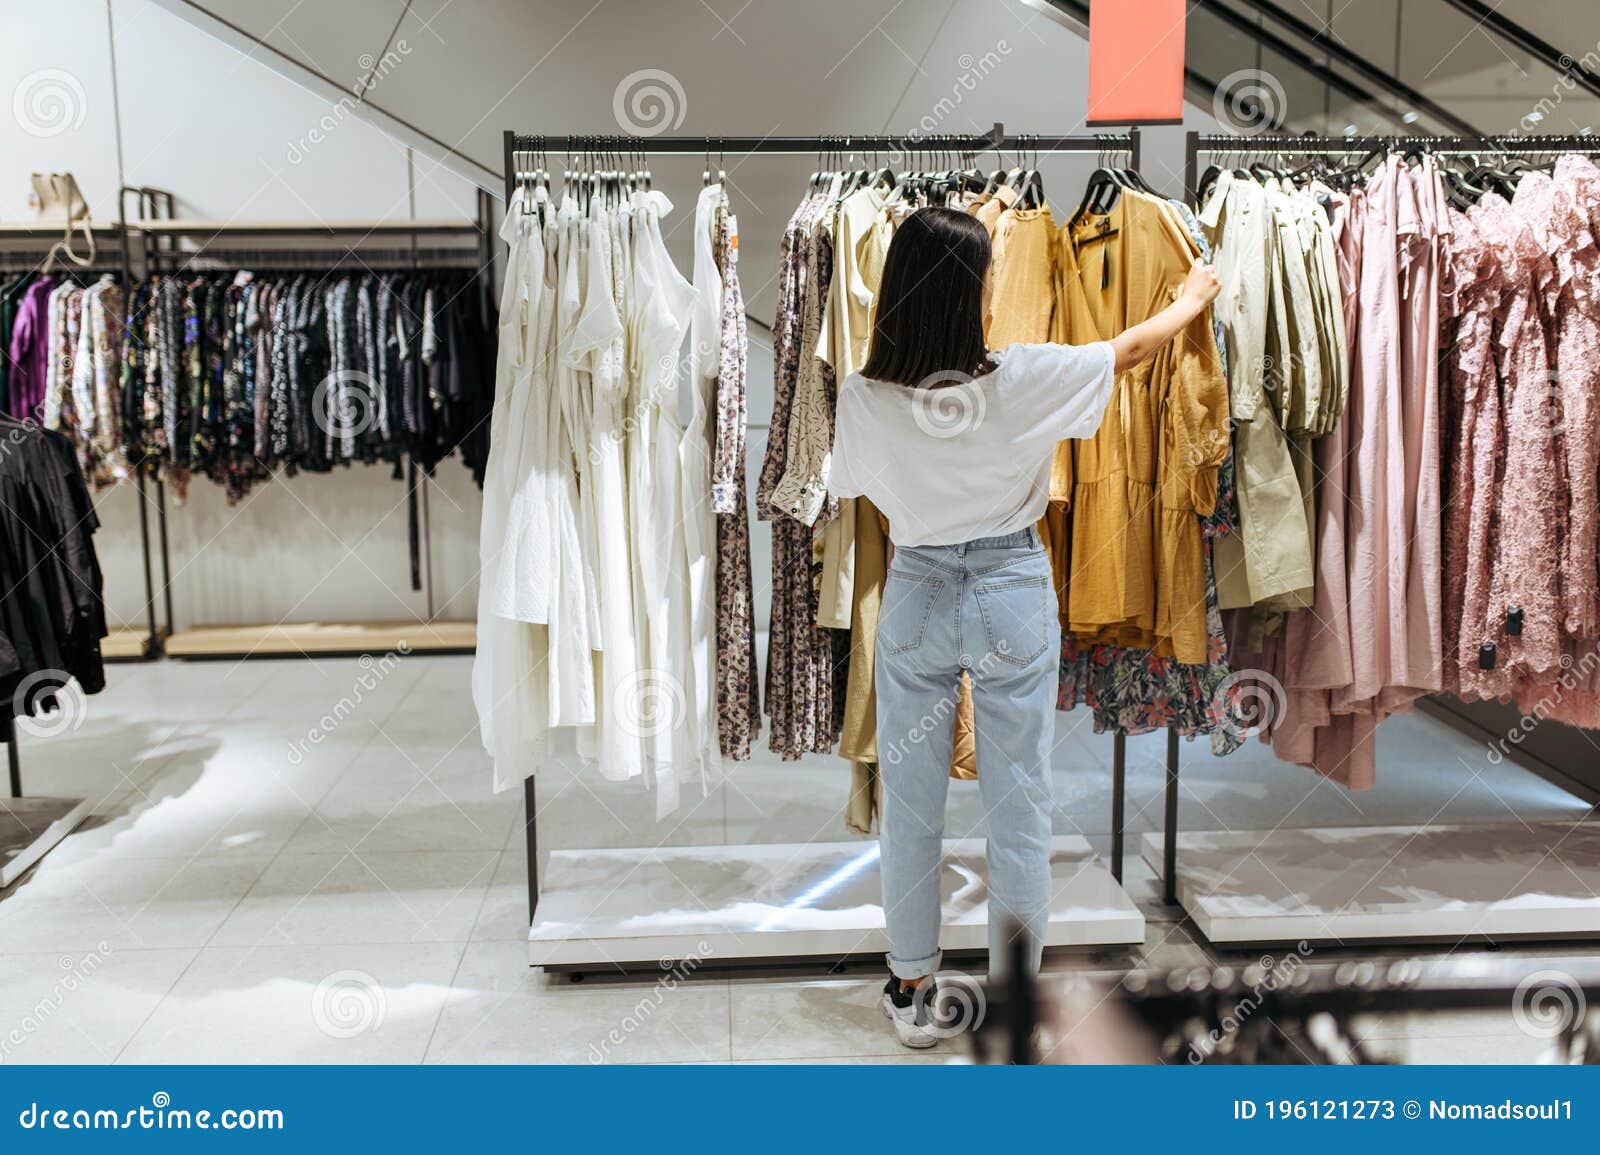 Woman Choosing Elegant Dress in Clothing Store Stock Image - Image of ...